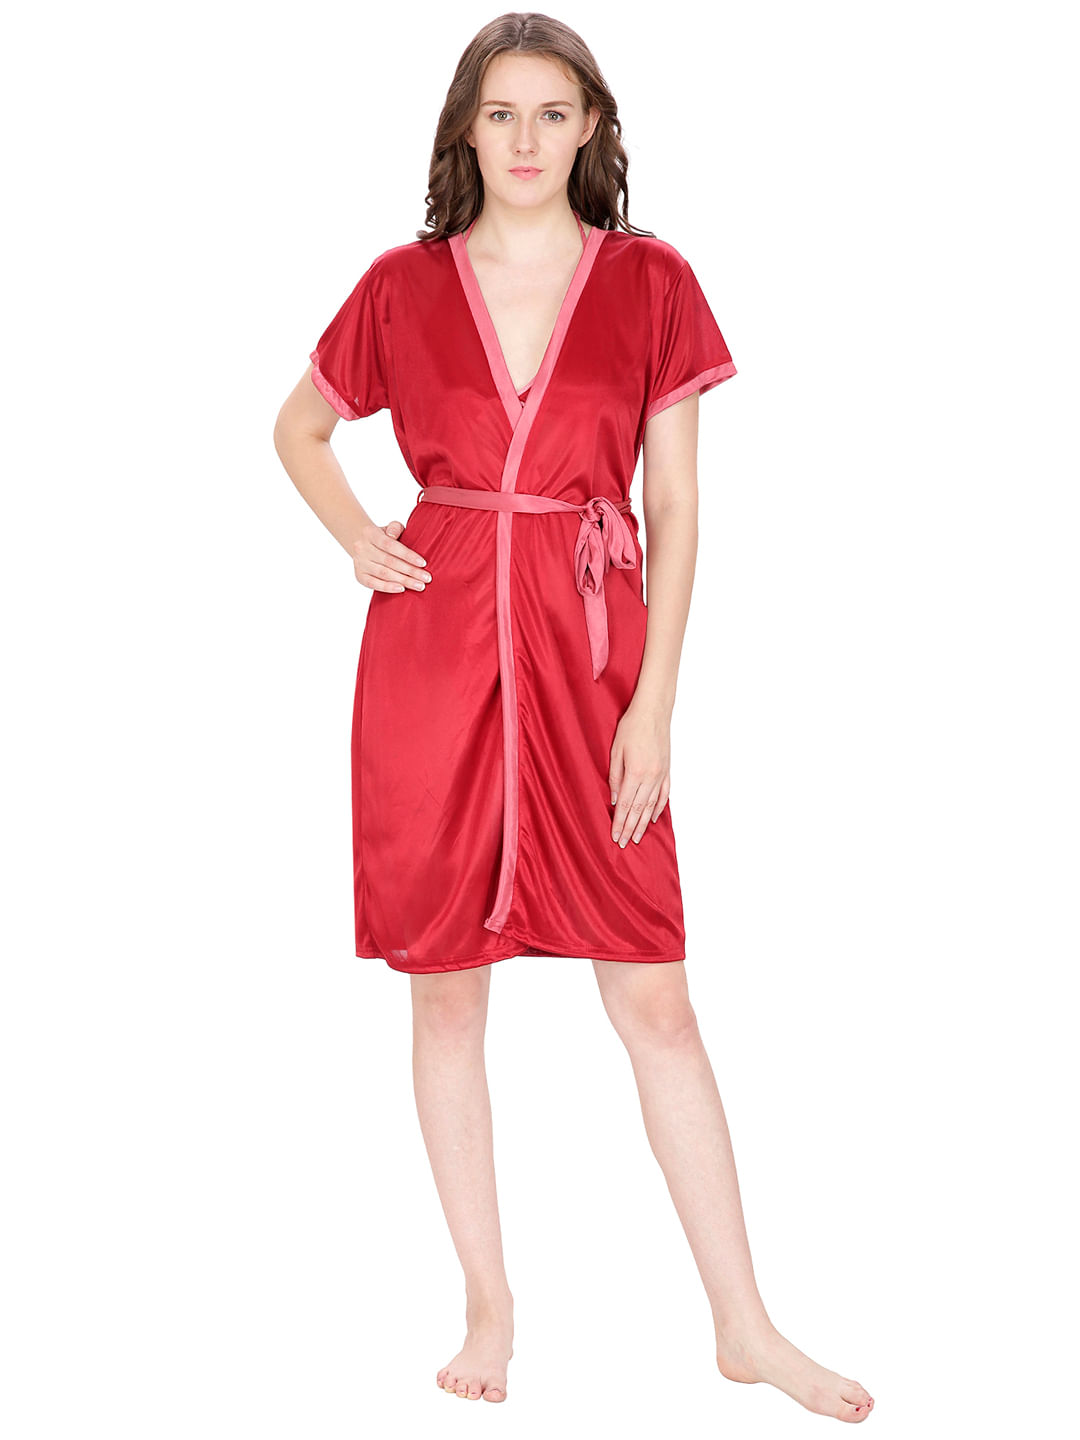 Satin Maroon Robe (Red, Free Size)